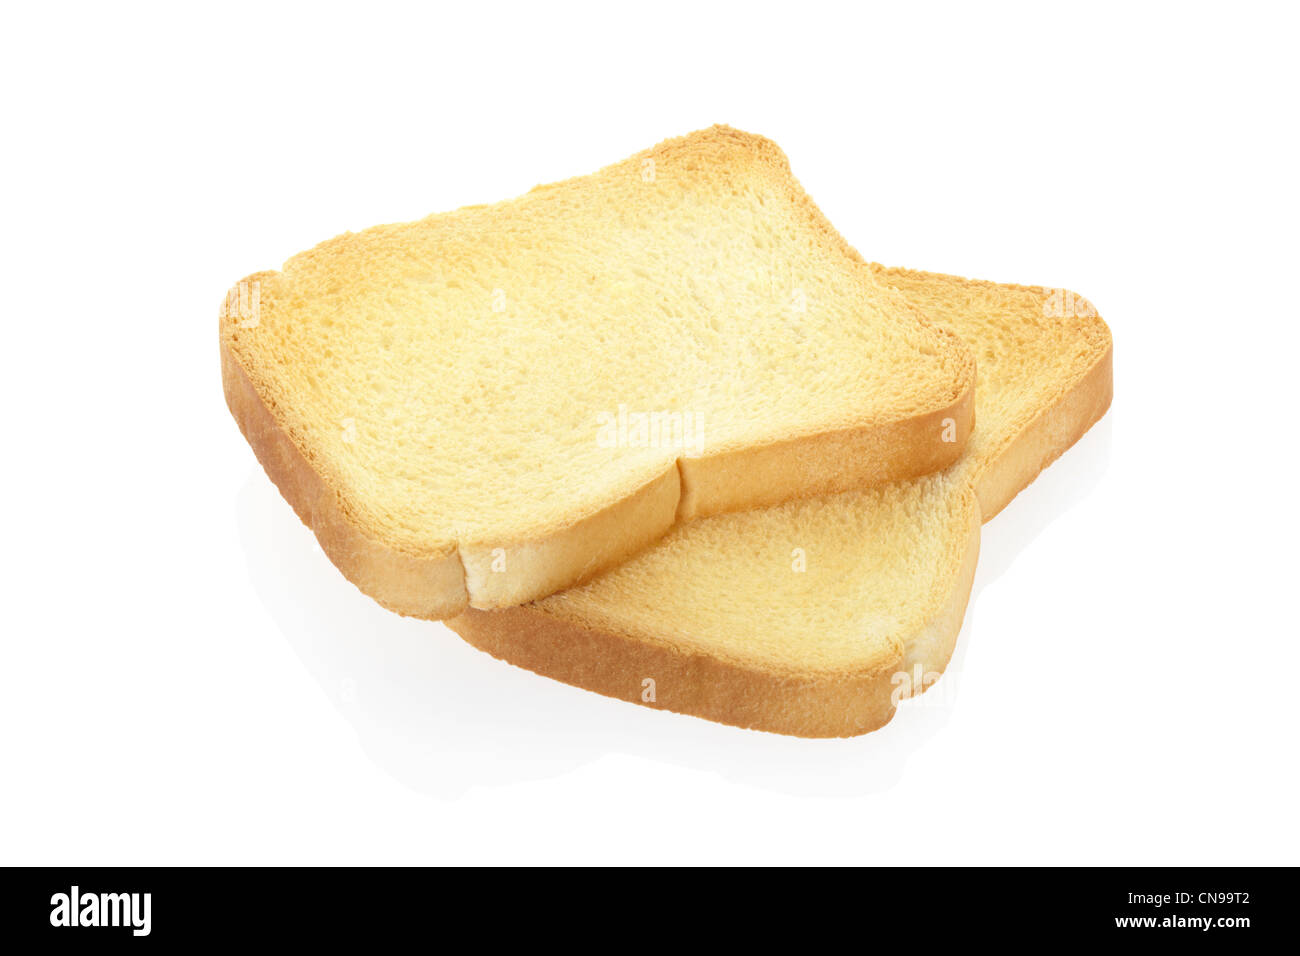 Rusk bread or toast Stock Photo